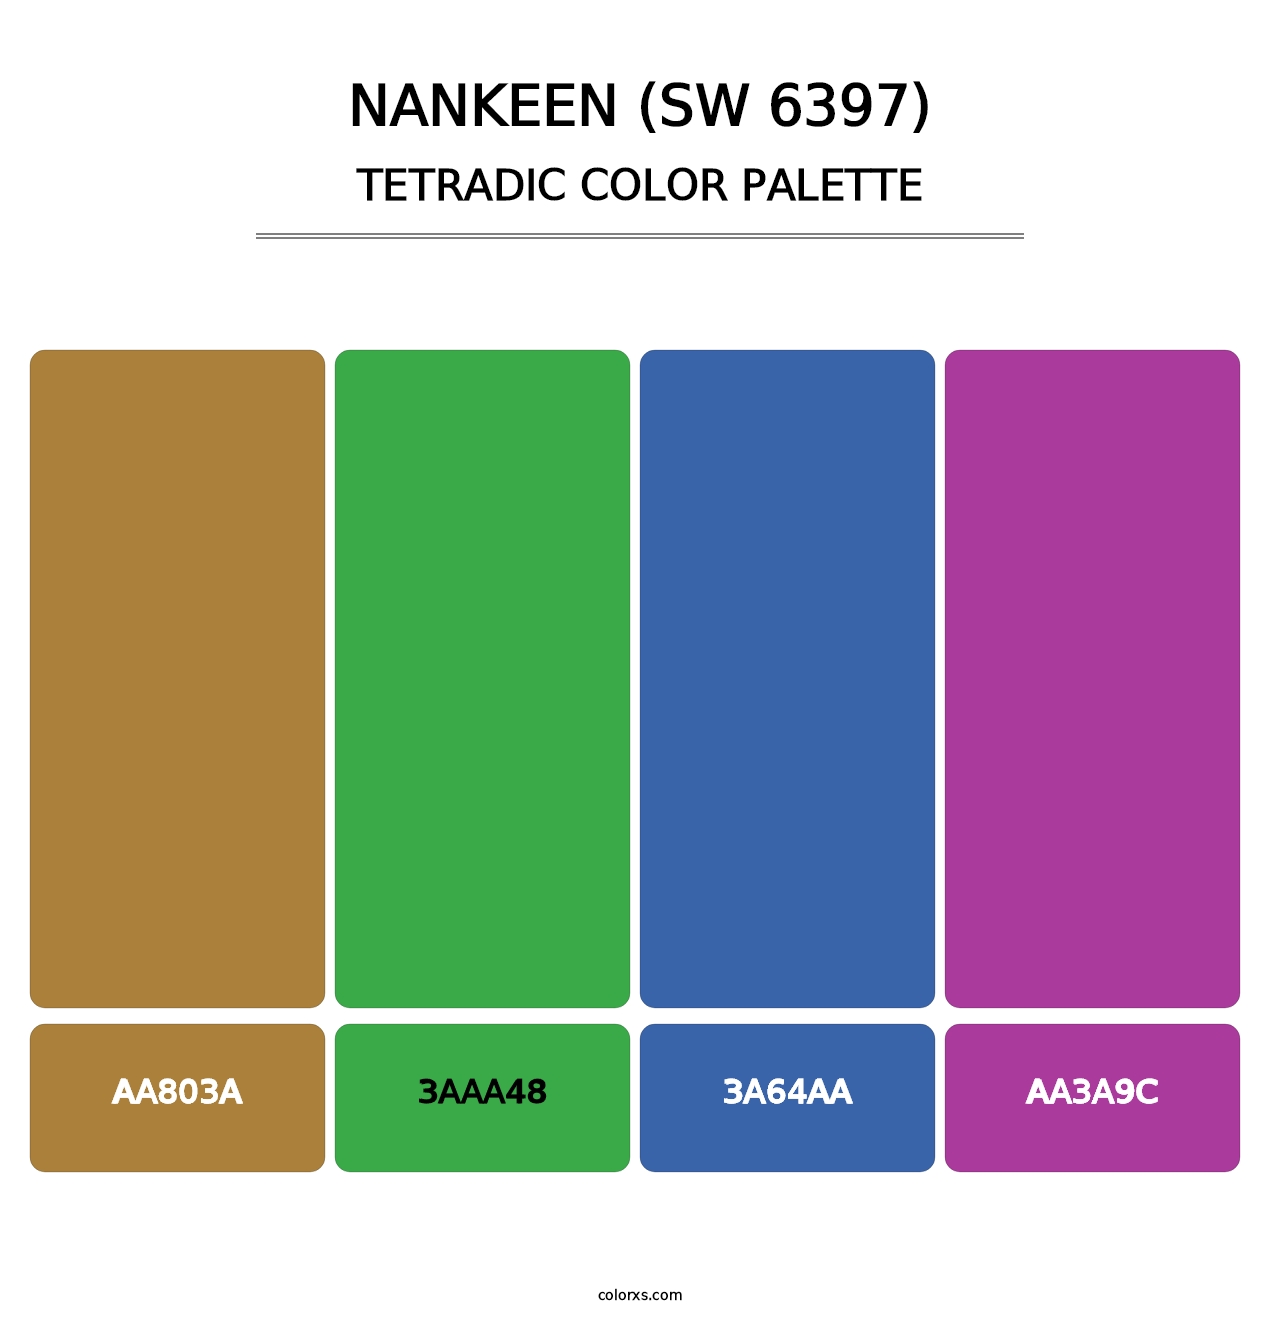 Nankeen (SW 6397) - Tetradic Color Palette